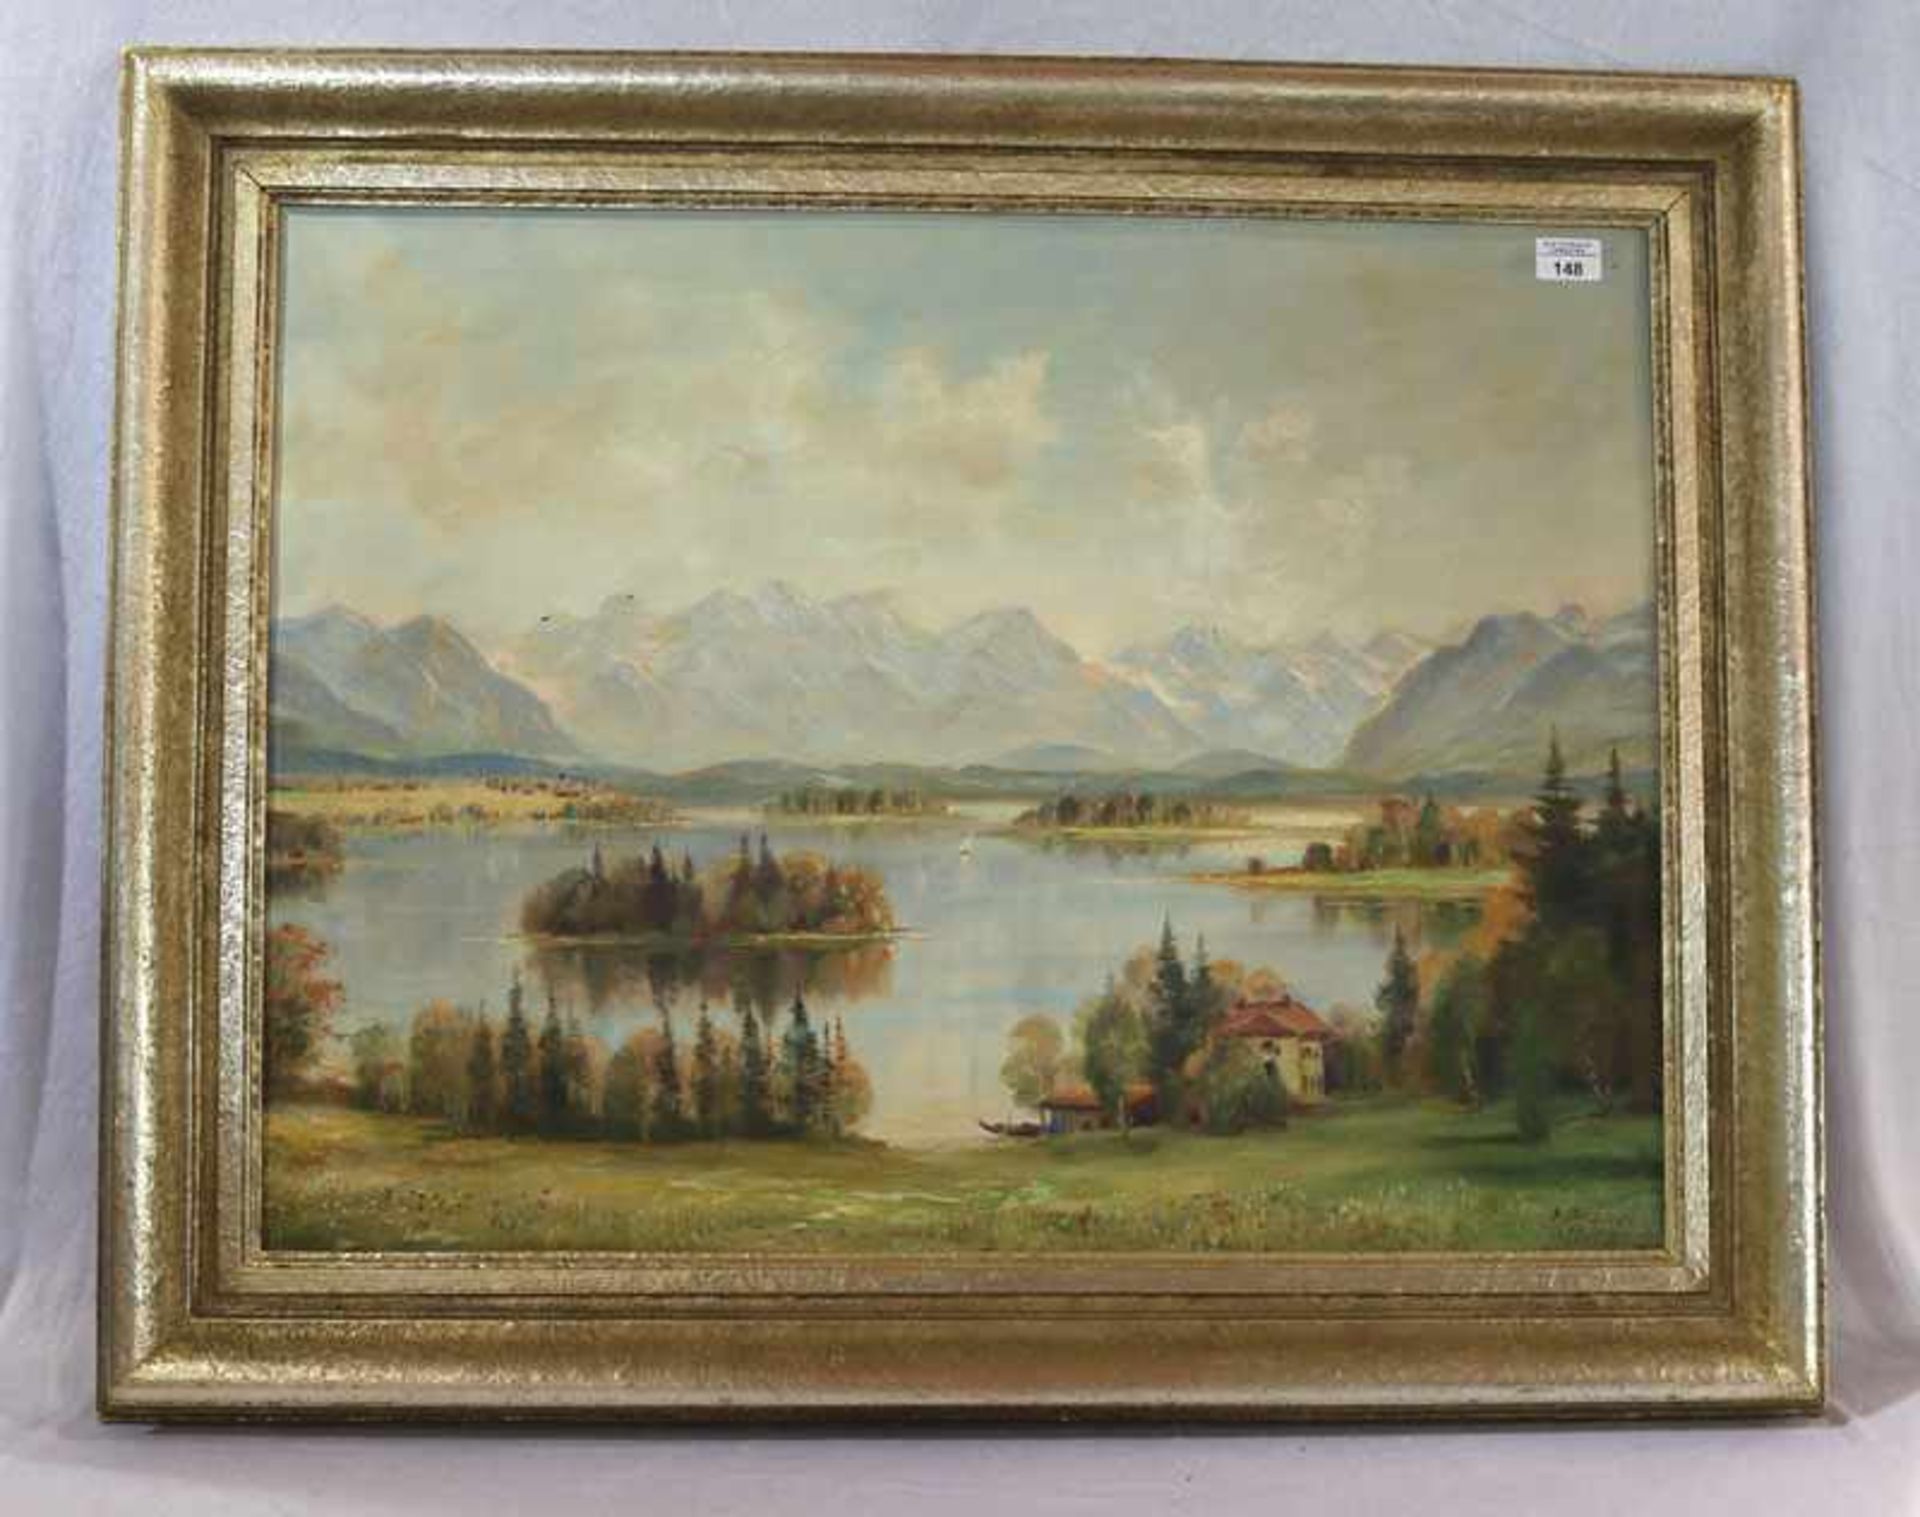 Gemälde ÖL/LW 'Staffelsee vor Gebirgs-Szenerie', signiert J. Brandl, Uffing, benötigt Reinigung,